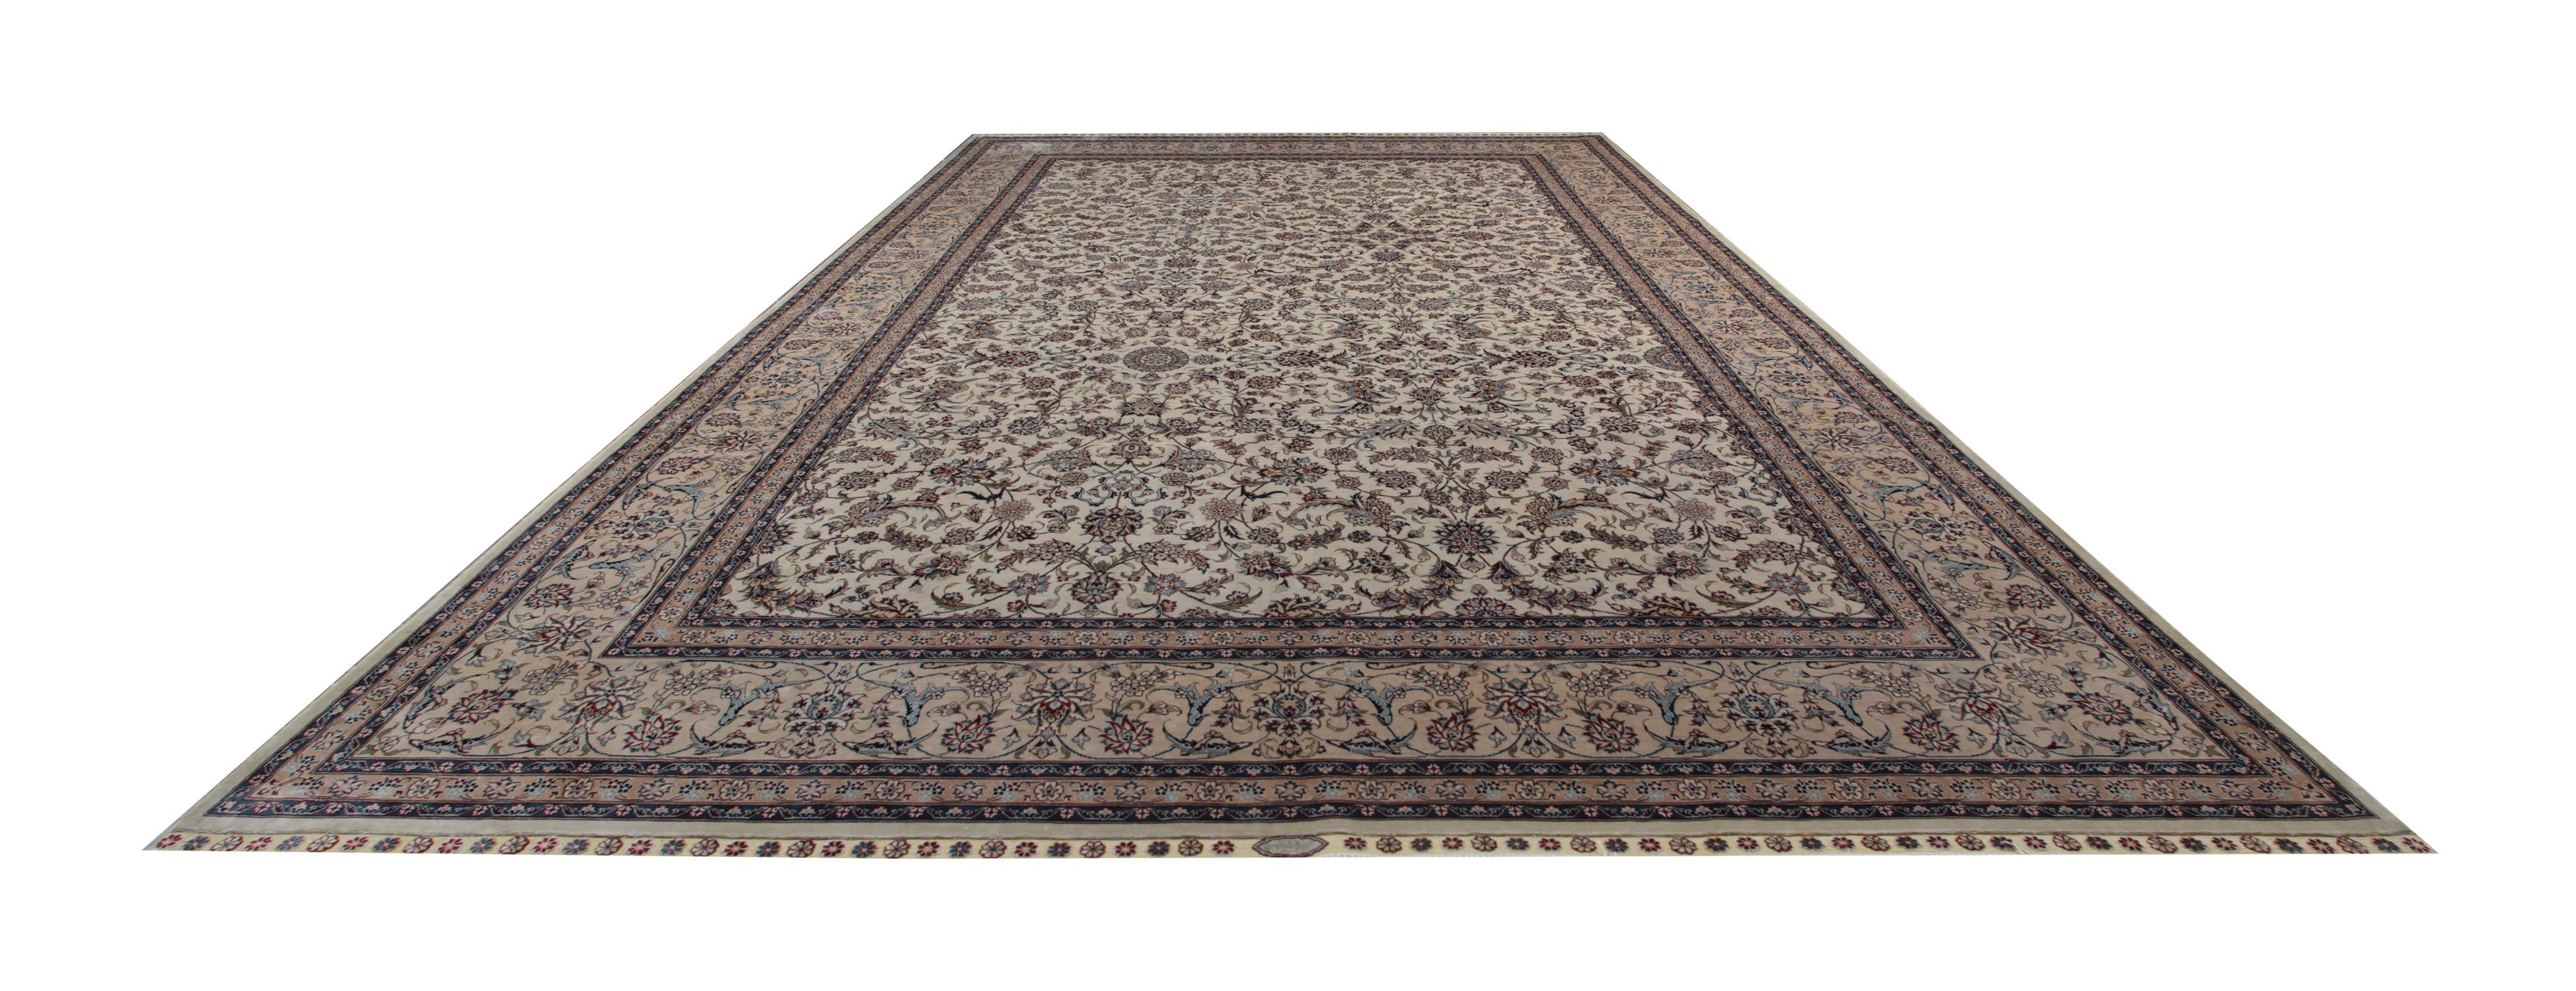 china persian carpet